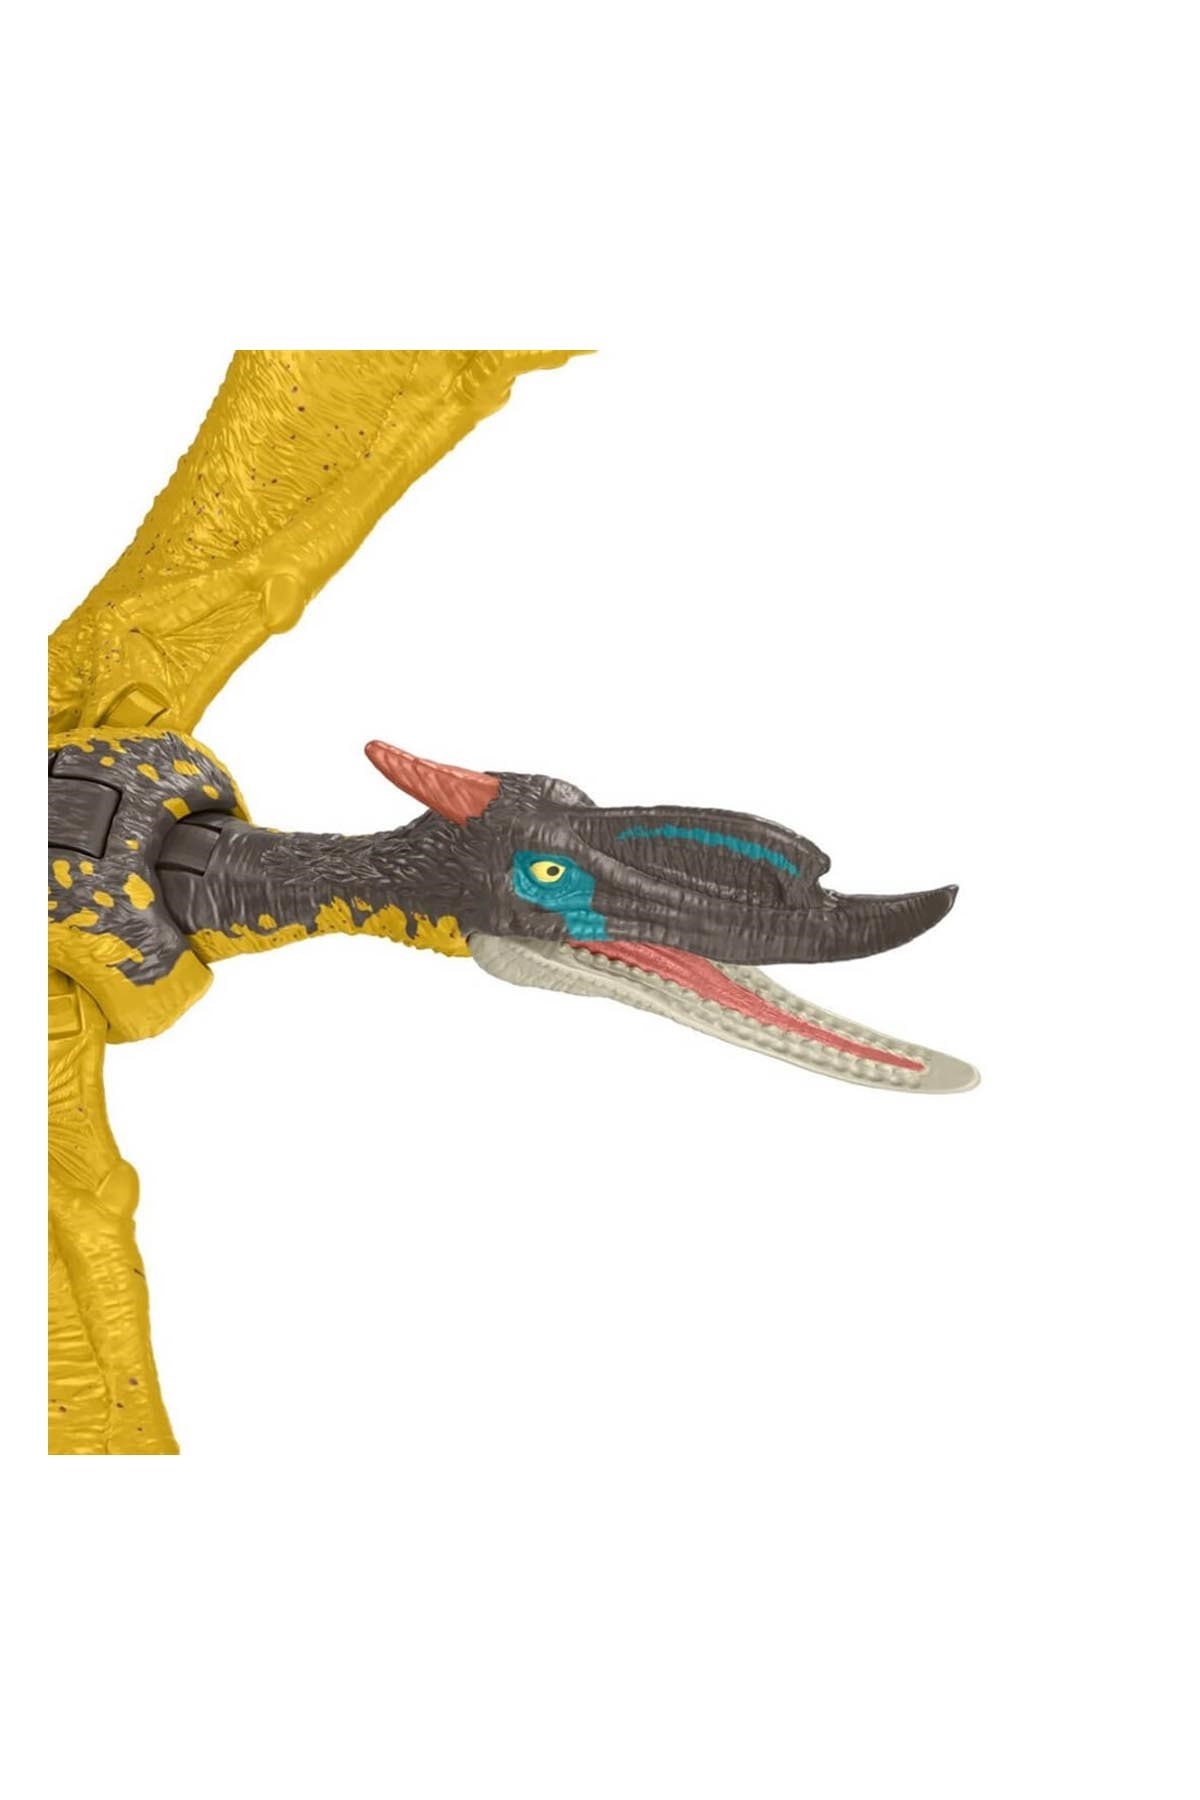 Jurassic World Tehlikeli Dinozor Figürü HDX20